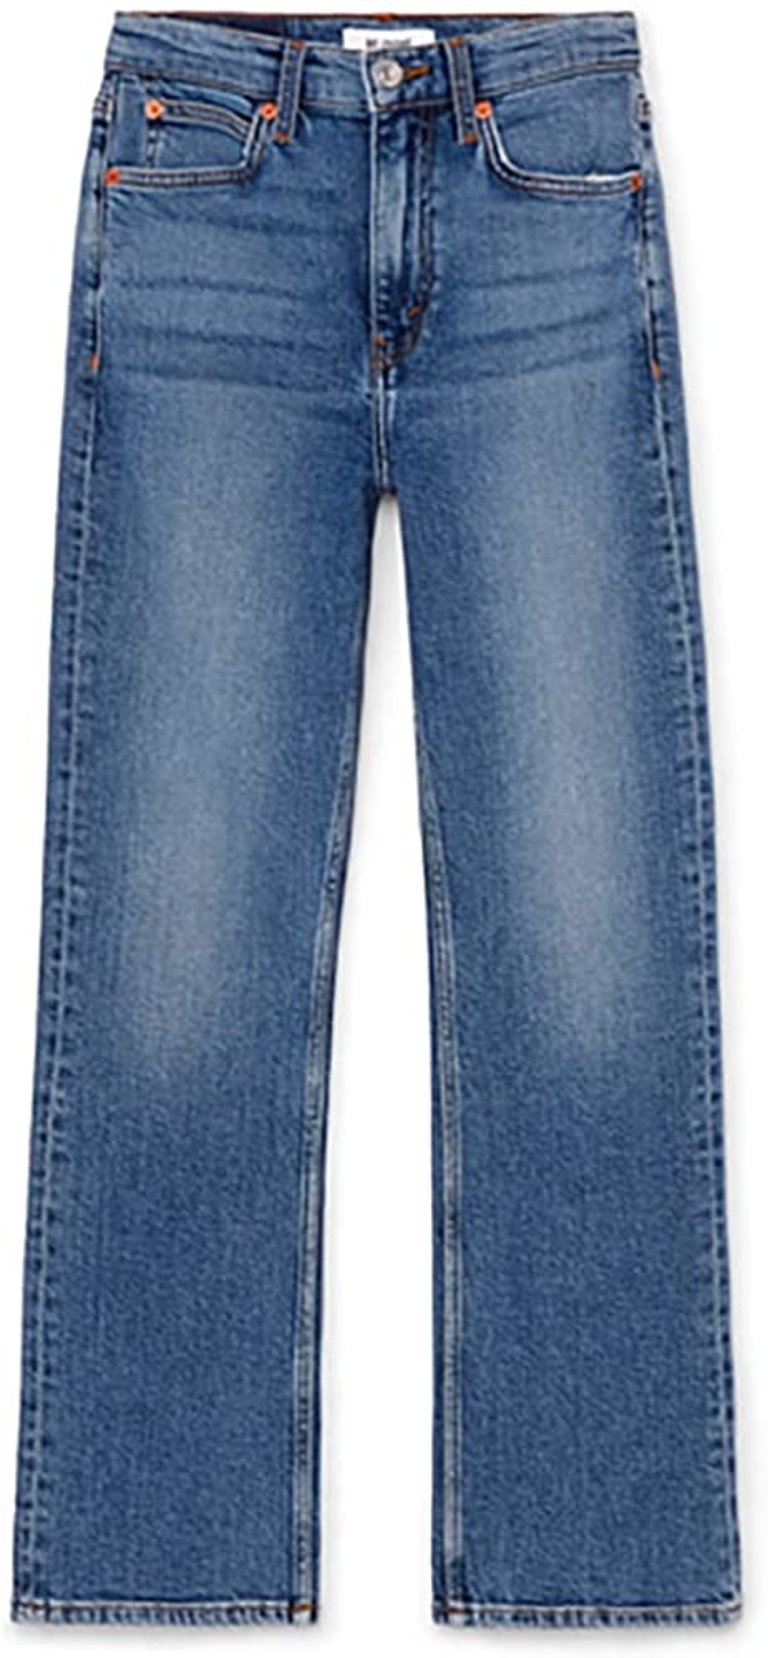 Women's Mid 70s Crop Boot Cut Jeans - Blue